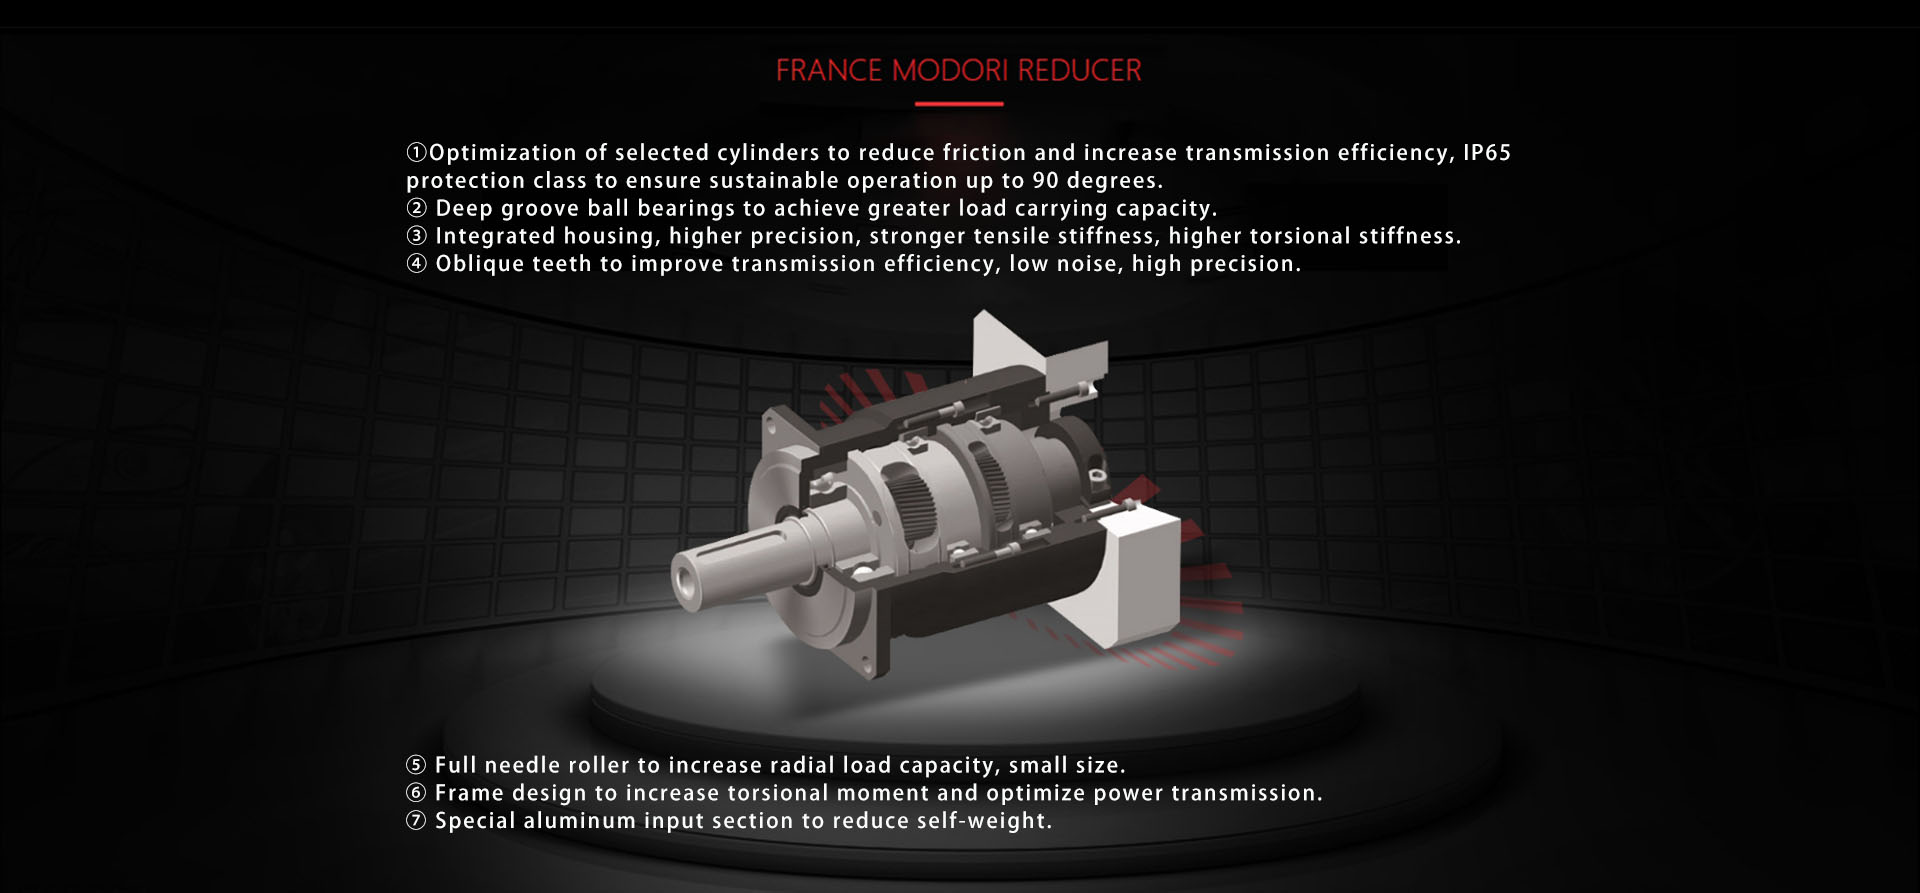 HG-400-3200/4000/5000/6000 Down acting hybrid cnc press brake parameter